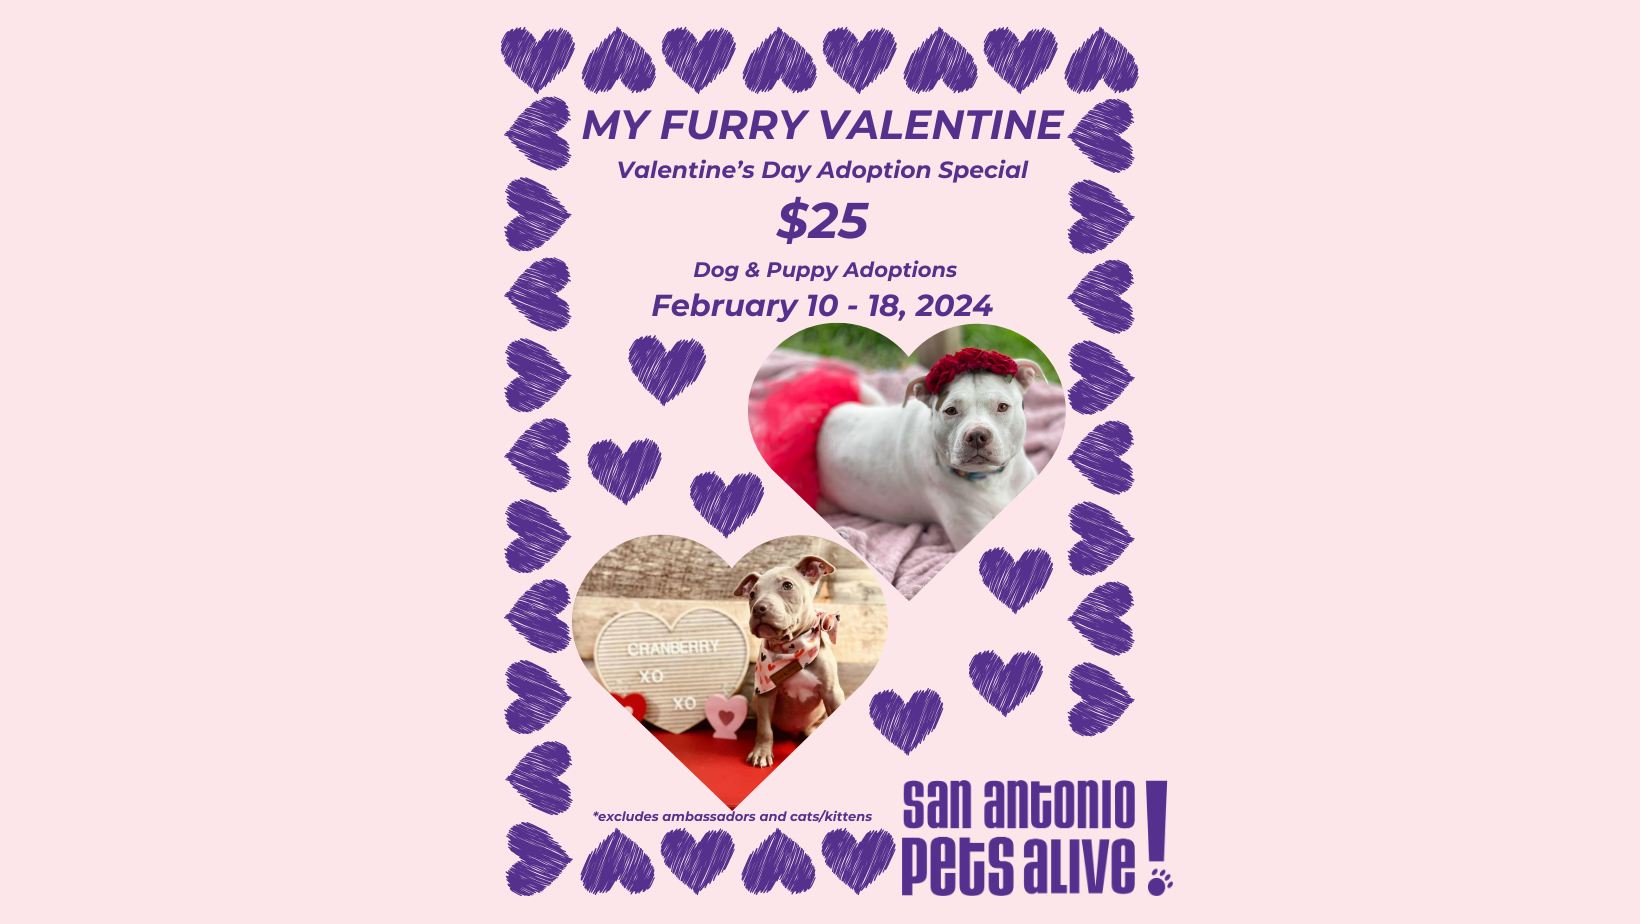 SAPA! "My Furry Valentine" $25 Dog & Puppy Adoption Special